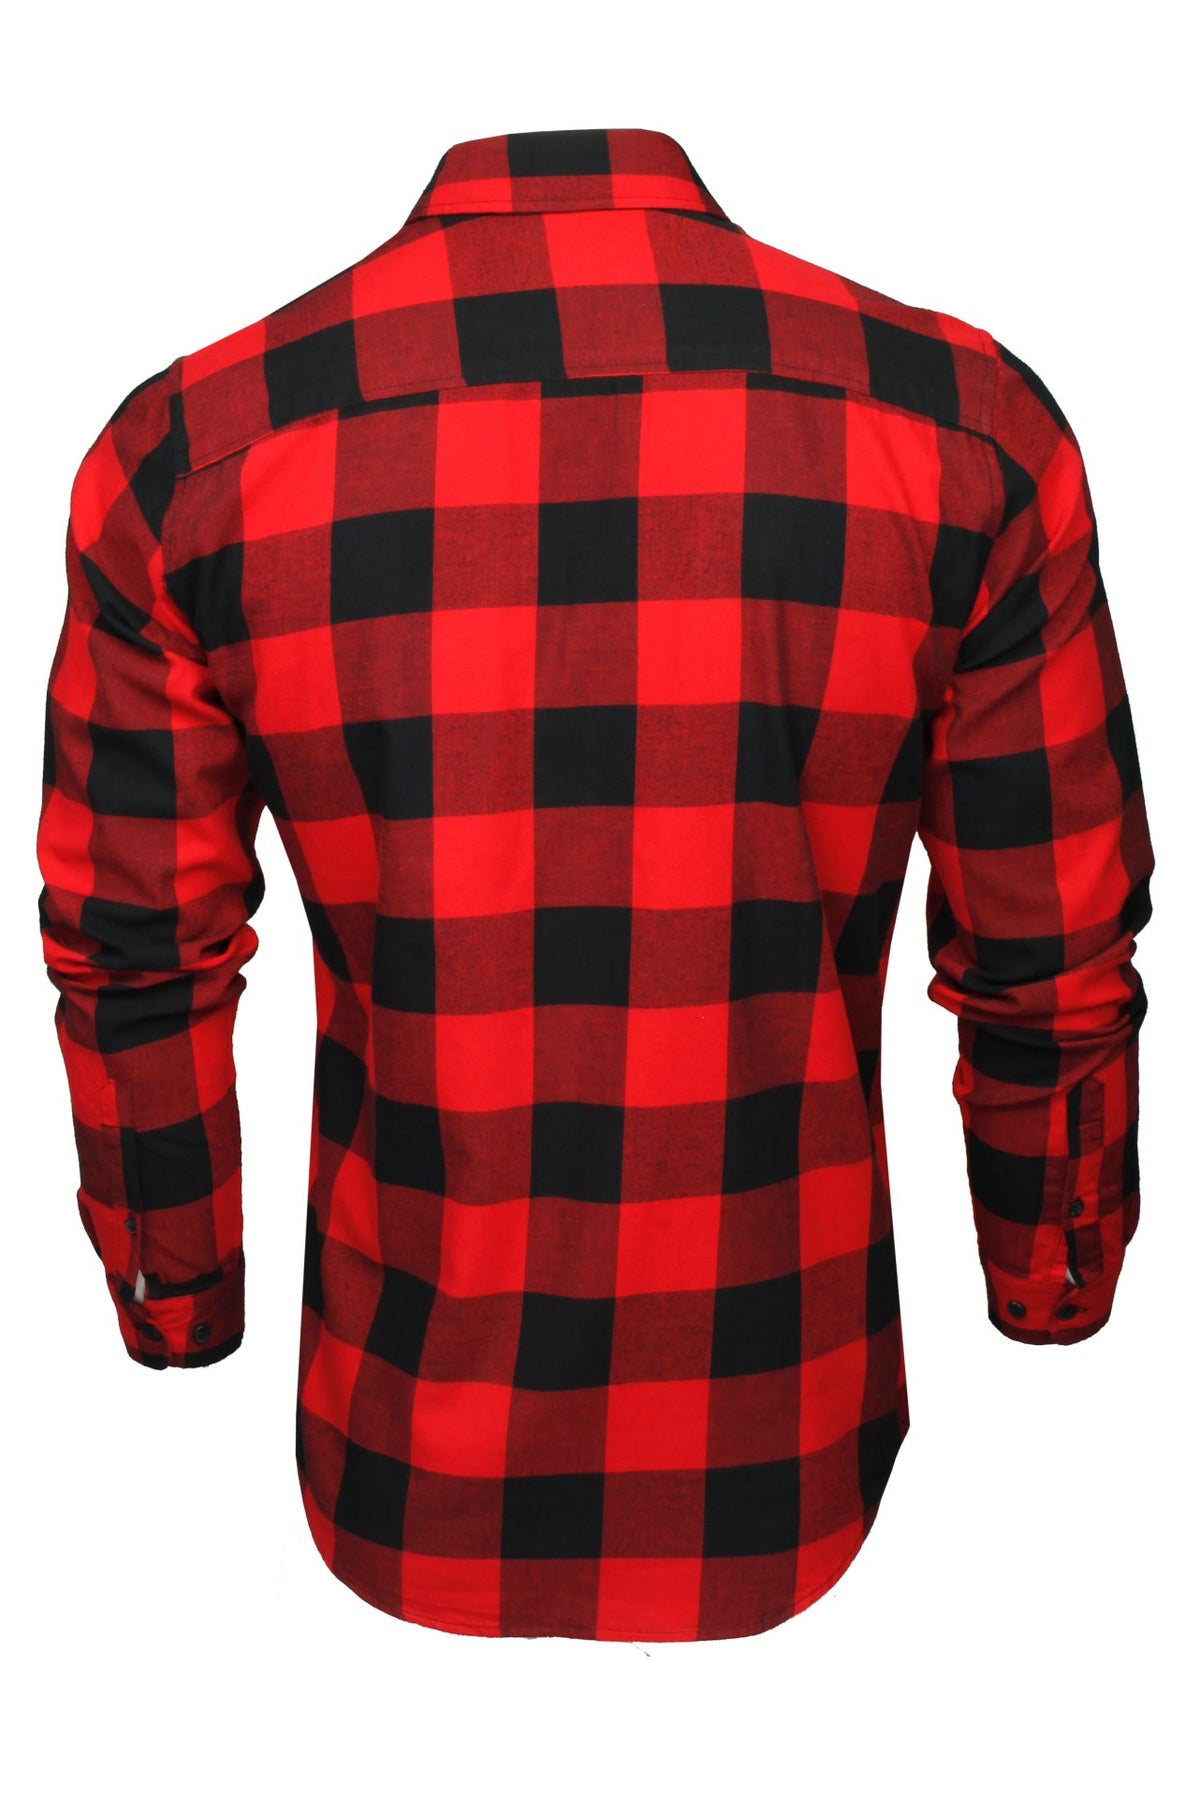 Jack & Jones Men's 'Gingham' Check Twill Shirt - Long Sleeved, 03, 12181602, Brick Red